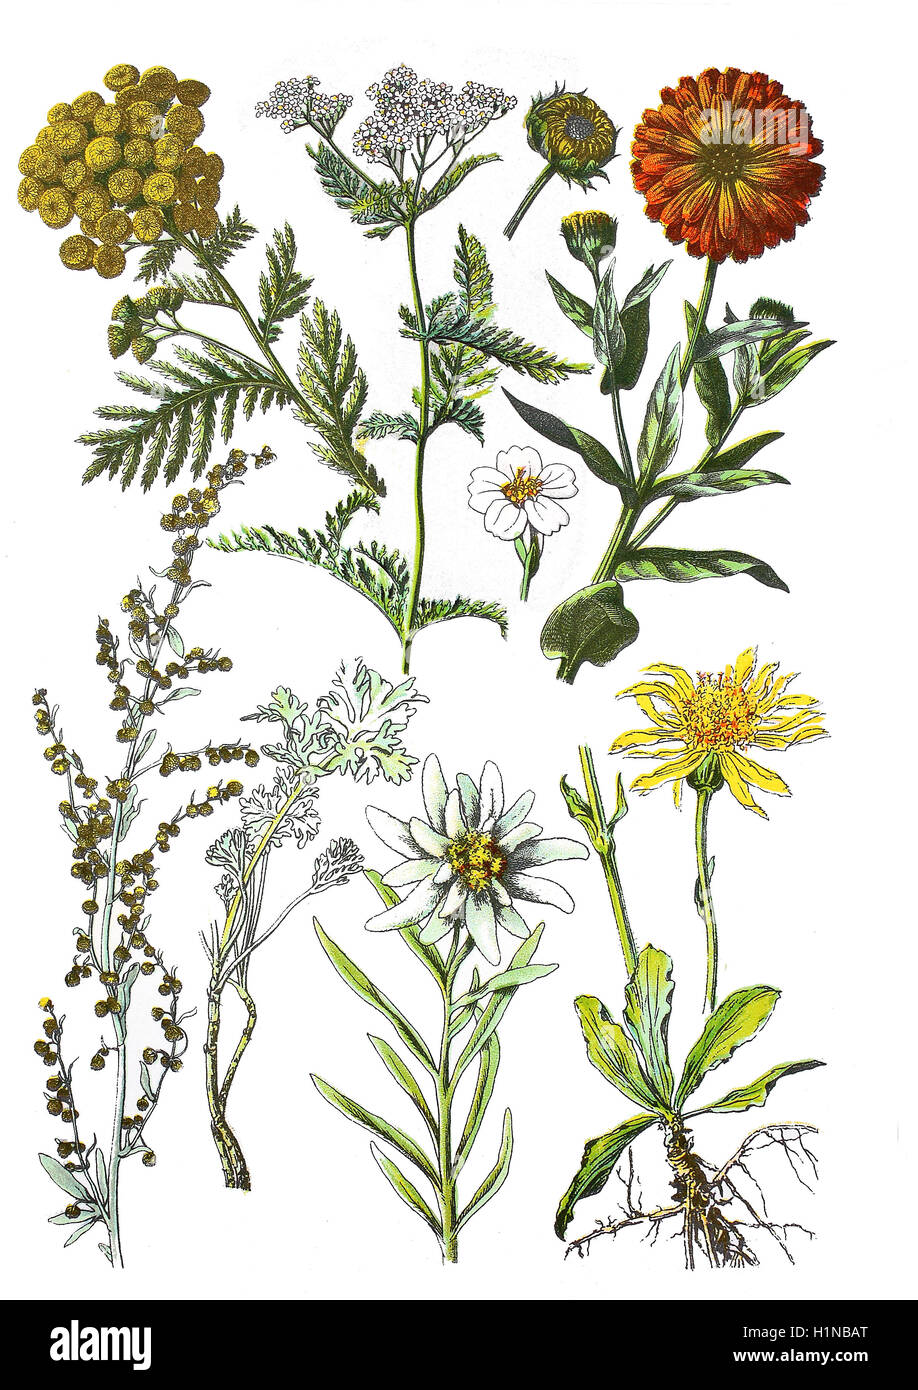 Tansy, Tanacetum vulgare L., Syn.: Chrysanthemum vulgare (L.) Bernh. (left top), yarrow, Achillea millefolium (top center),  Ringelblume, Calendula officinalis (top right), absinthe wormwood, Artemisia absinthium L. (bottem left), edelweiss, Leontopodium nivale subsp. alpinum (bottem center), mountain arnica, Arnica montana (bottem right) Stock Photo